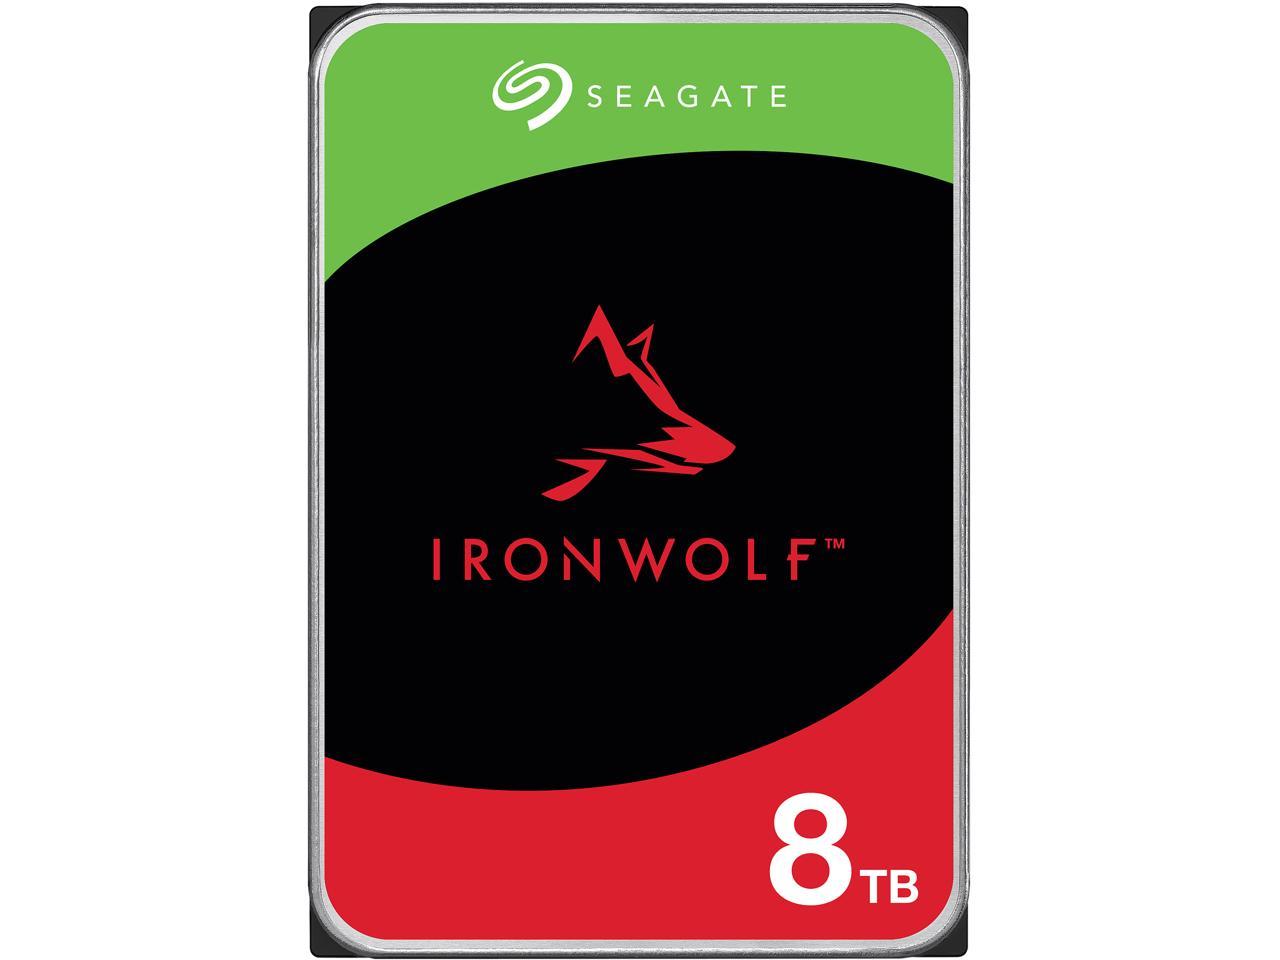 Seagate IronWolf 8TB NAS Hard Drive 7200 RPM 256MB Cache SATA 6.0Gb/s CMR 3.5" Internal HDD for RAID Network Attached Storage ST8000VN004-NE